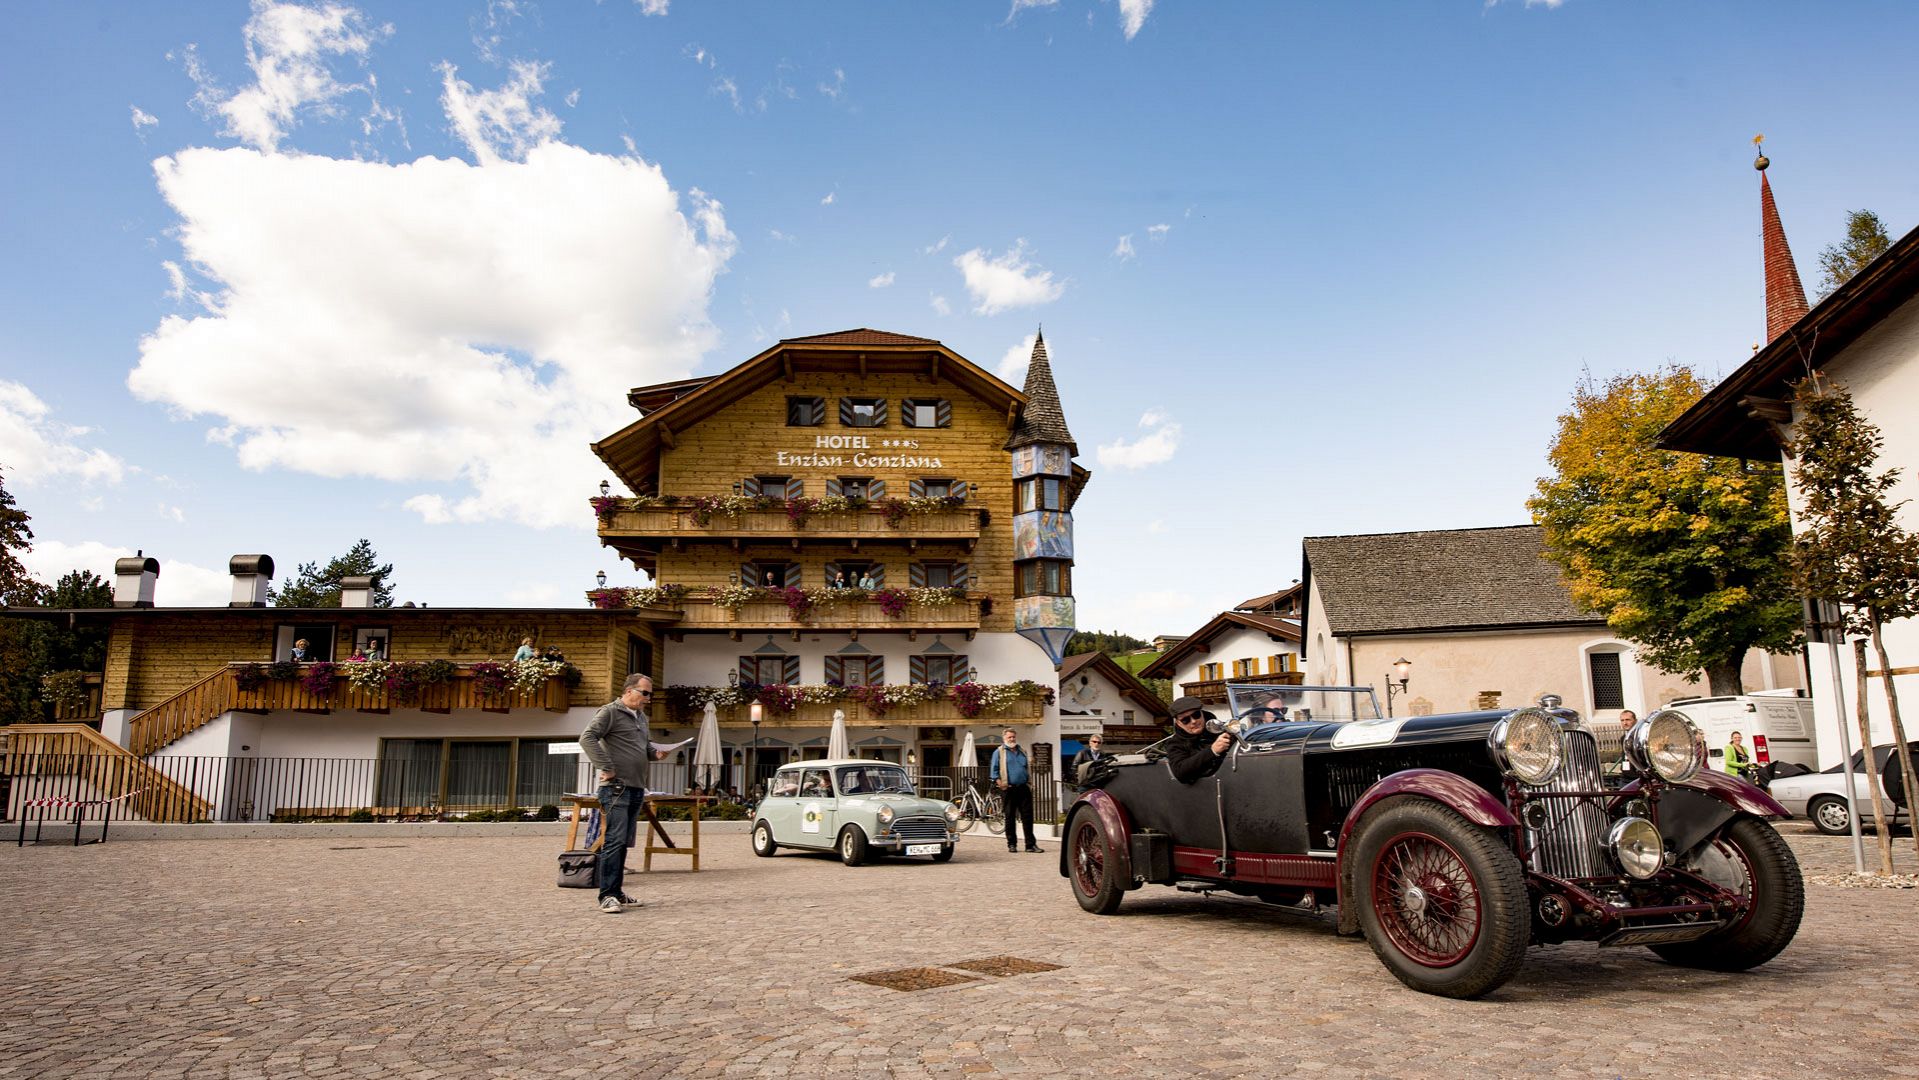 Oldtimer Hotel Genziana Siusi South Tyrol